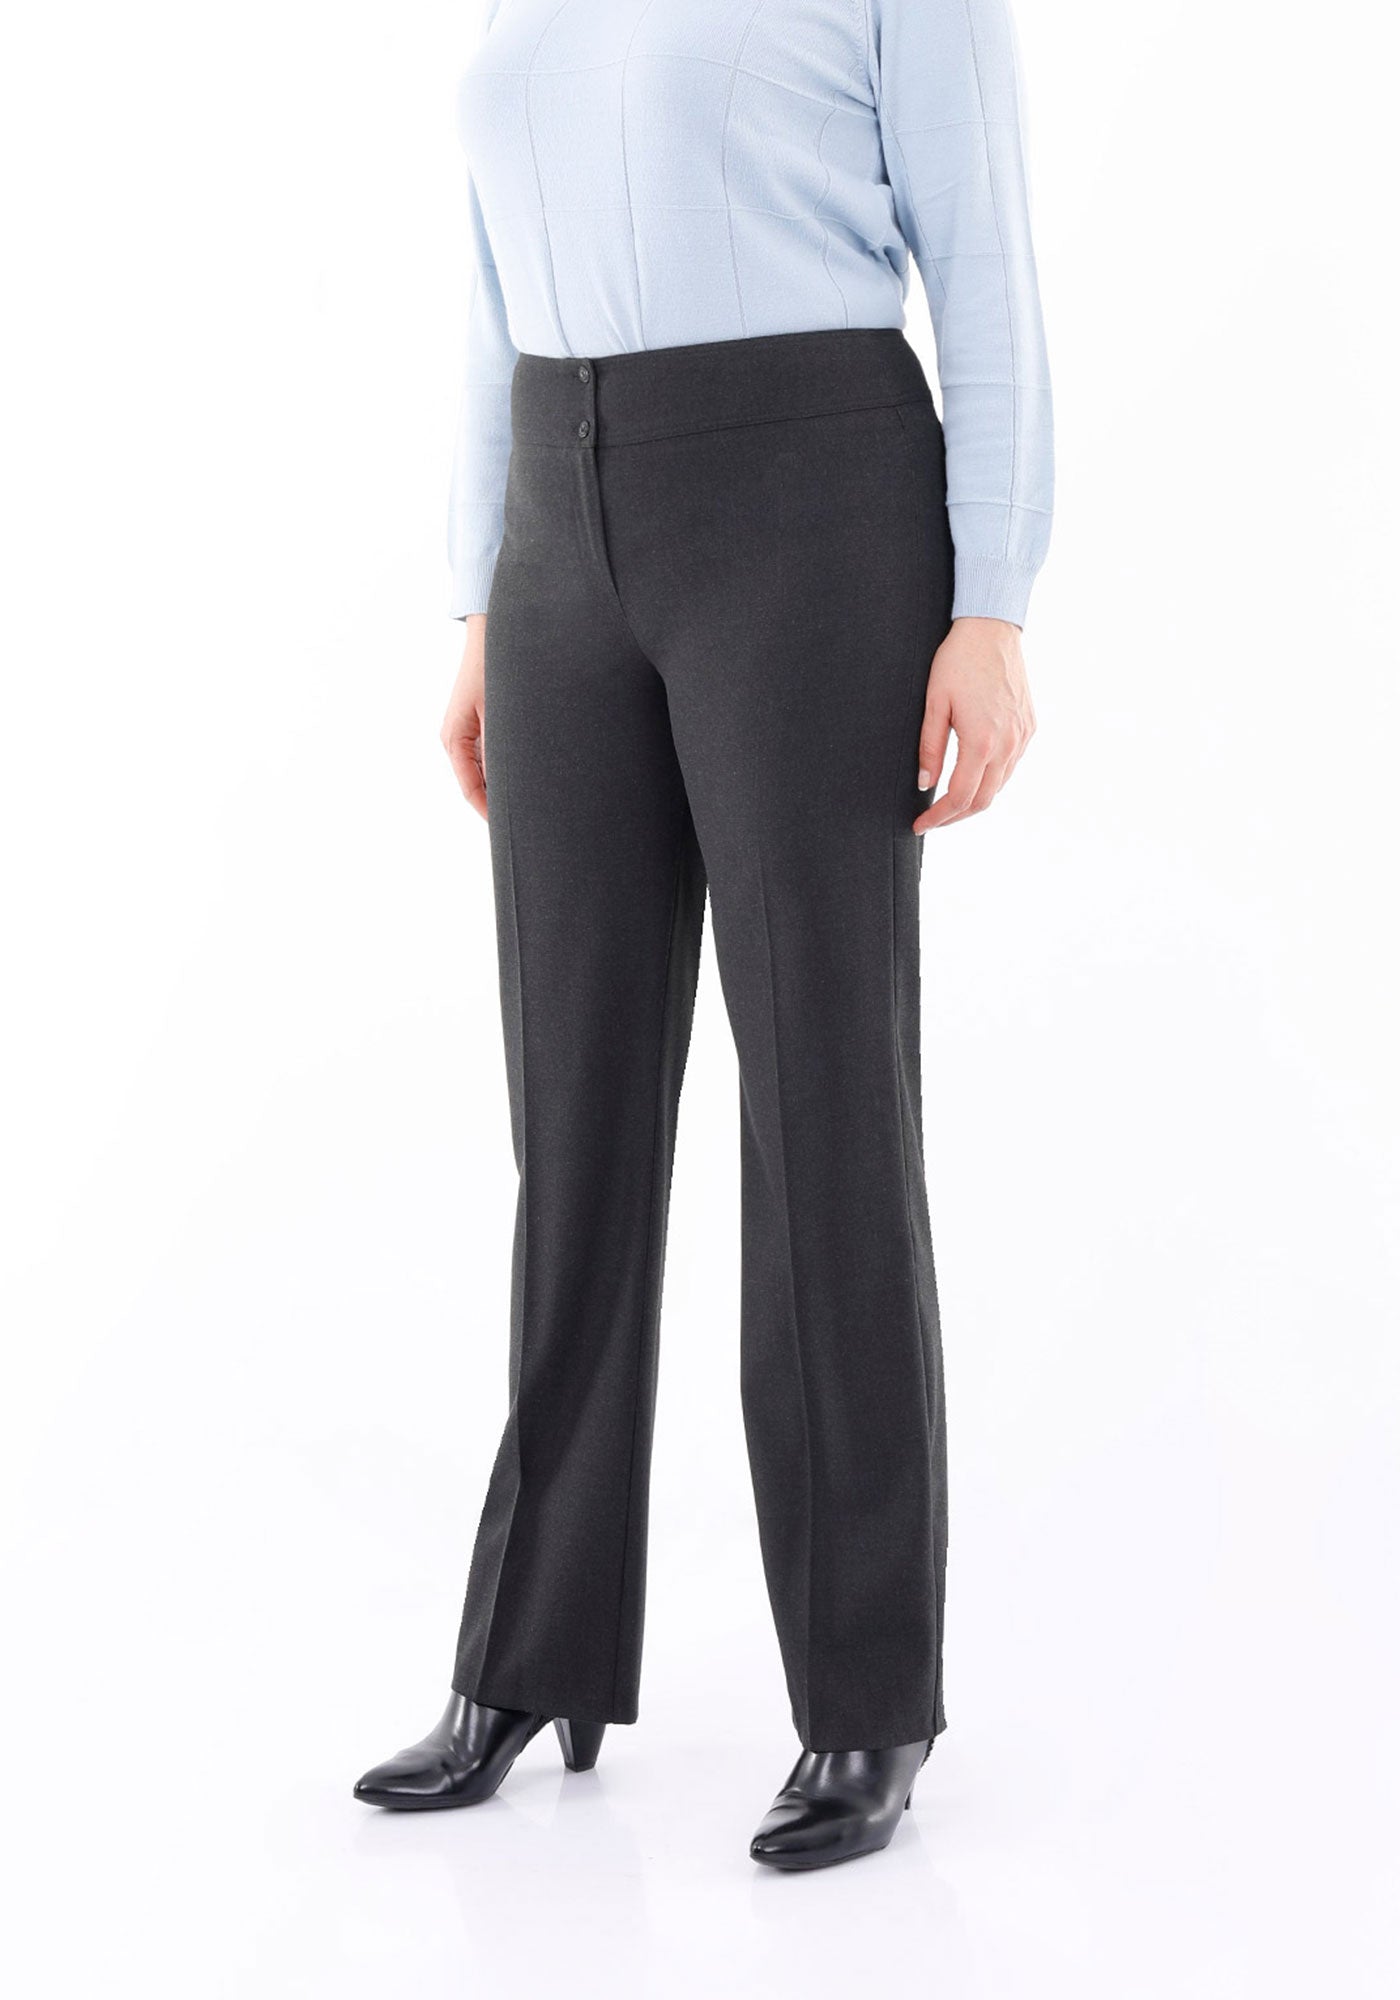 Charcoal Grey Women's Straight Leg Dress Pants Glinetex